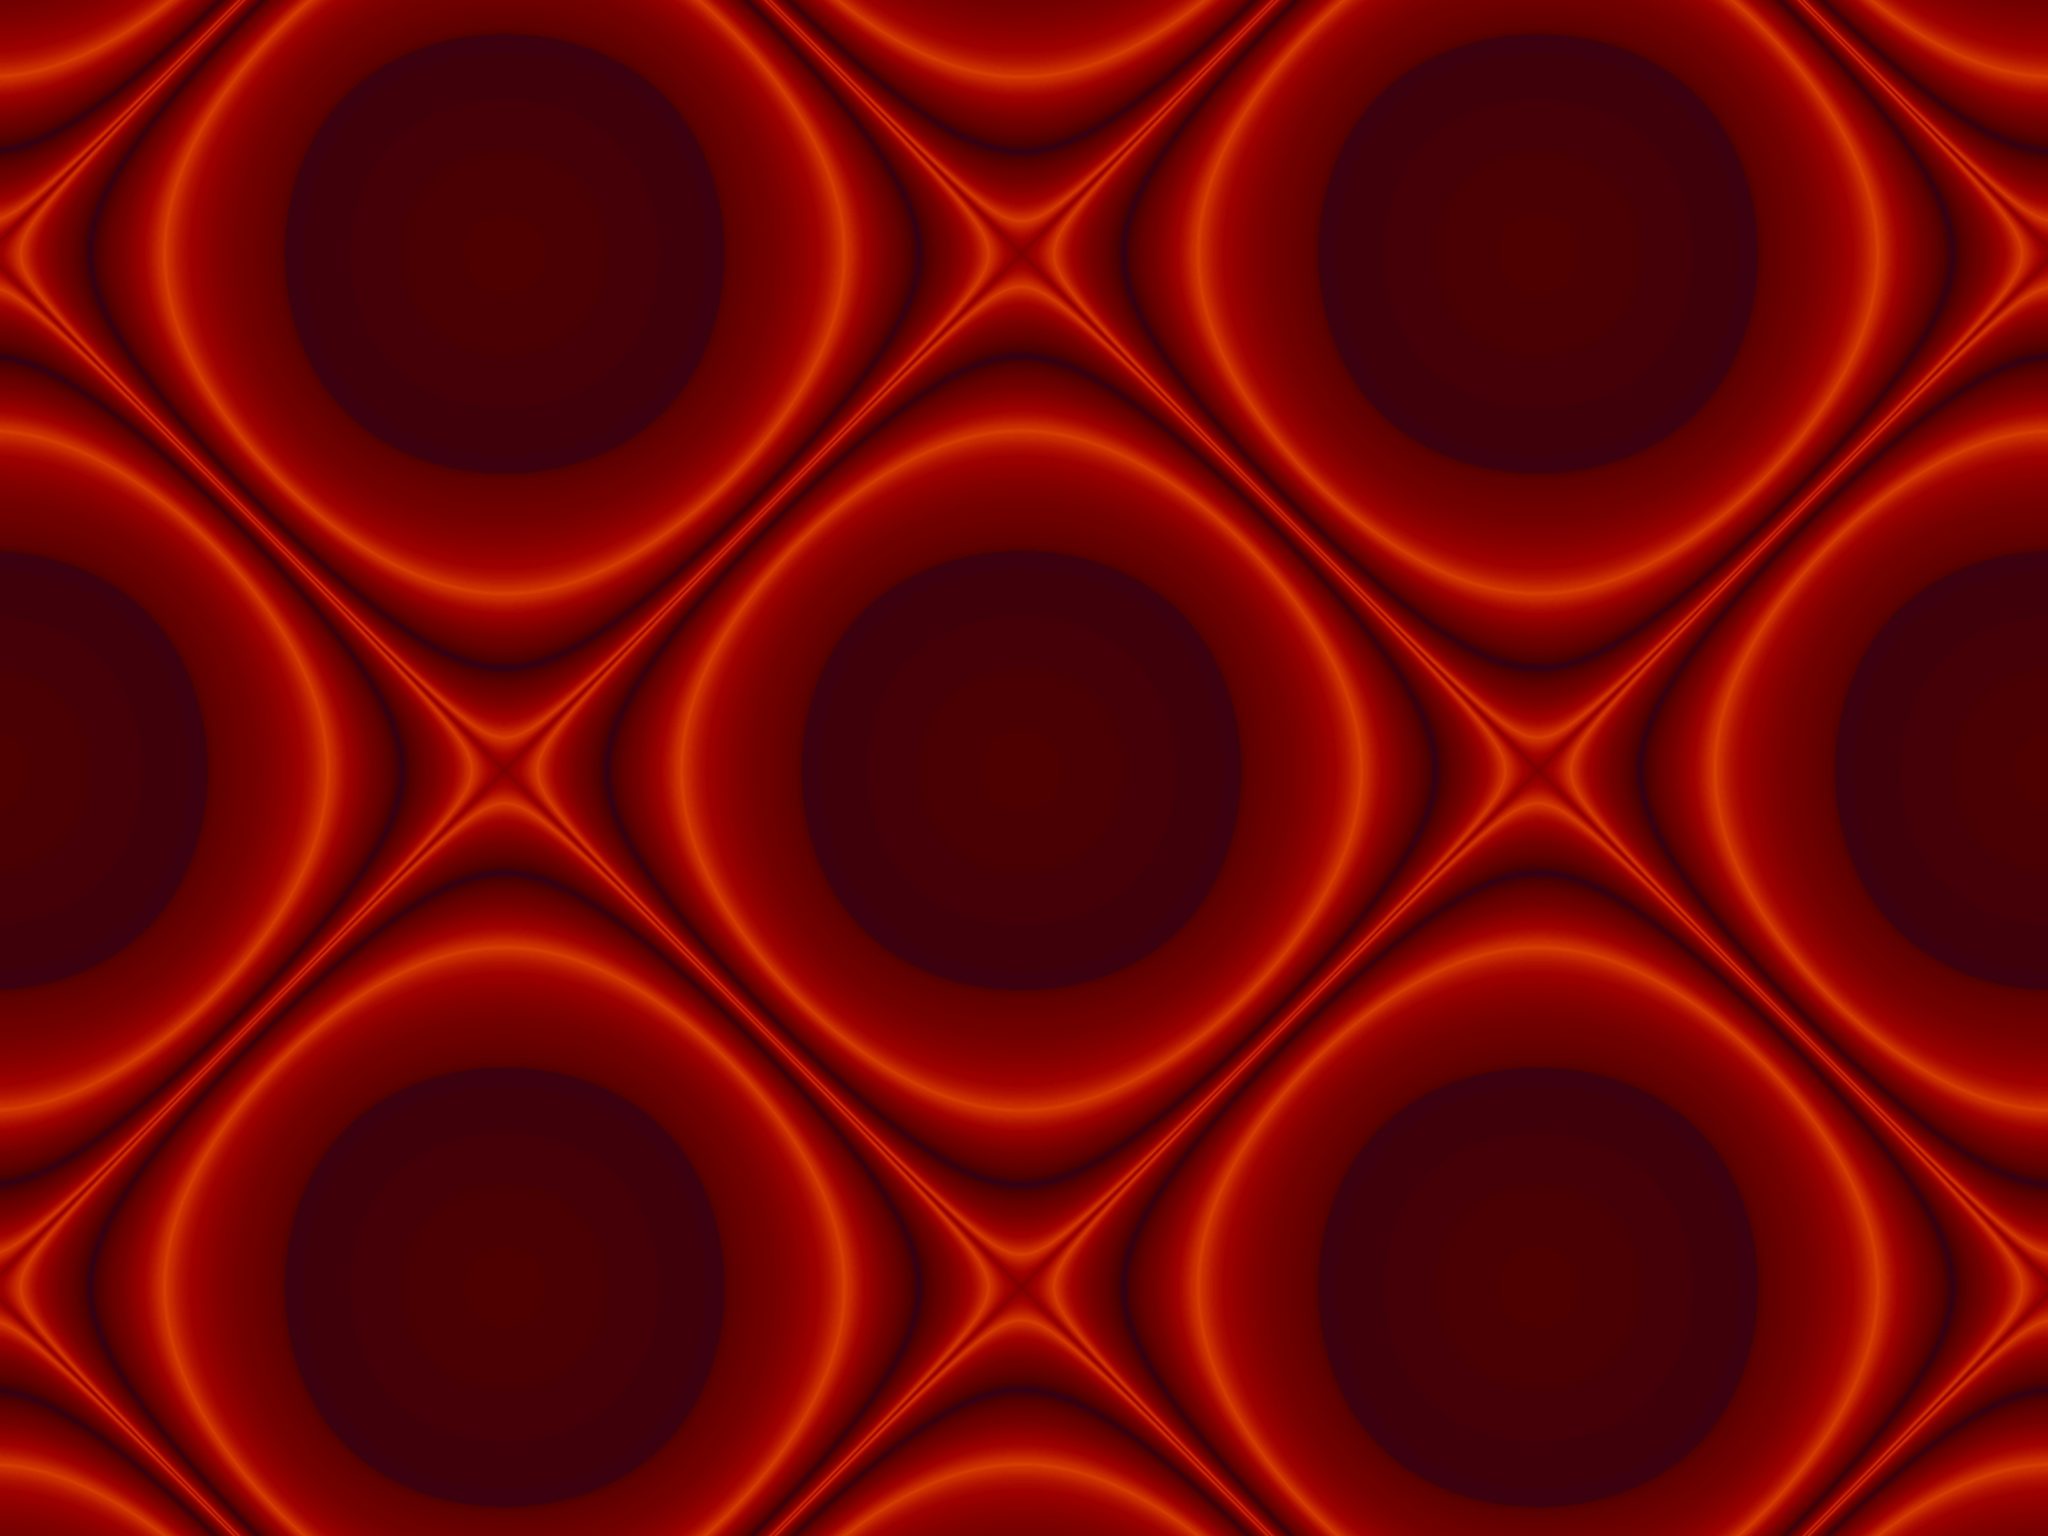 2048x1536 wallpaper Abstract Pattern Design Red Ipad Wallpaper 2048x1536 pixels resolution